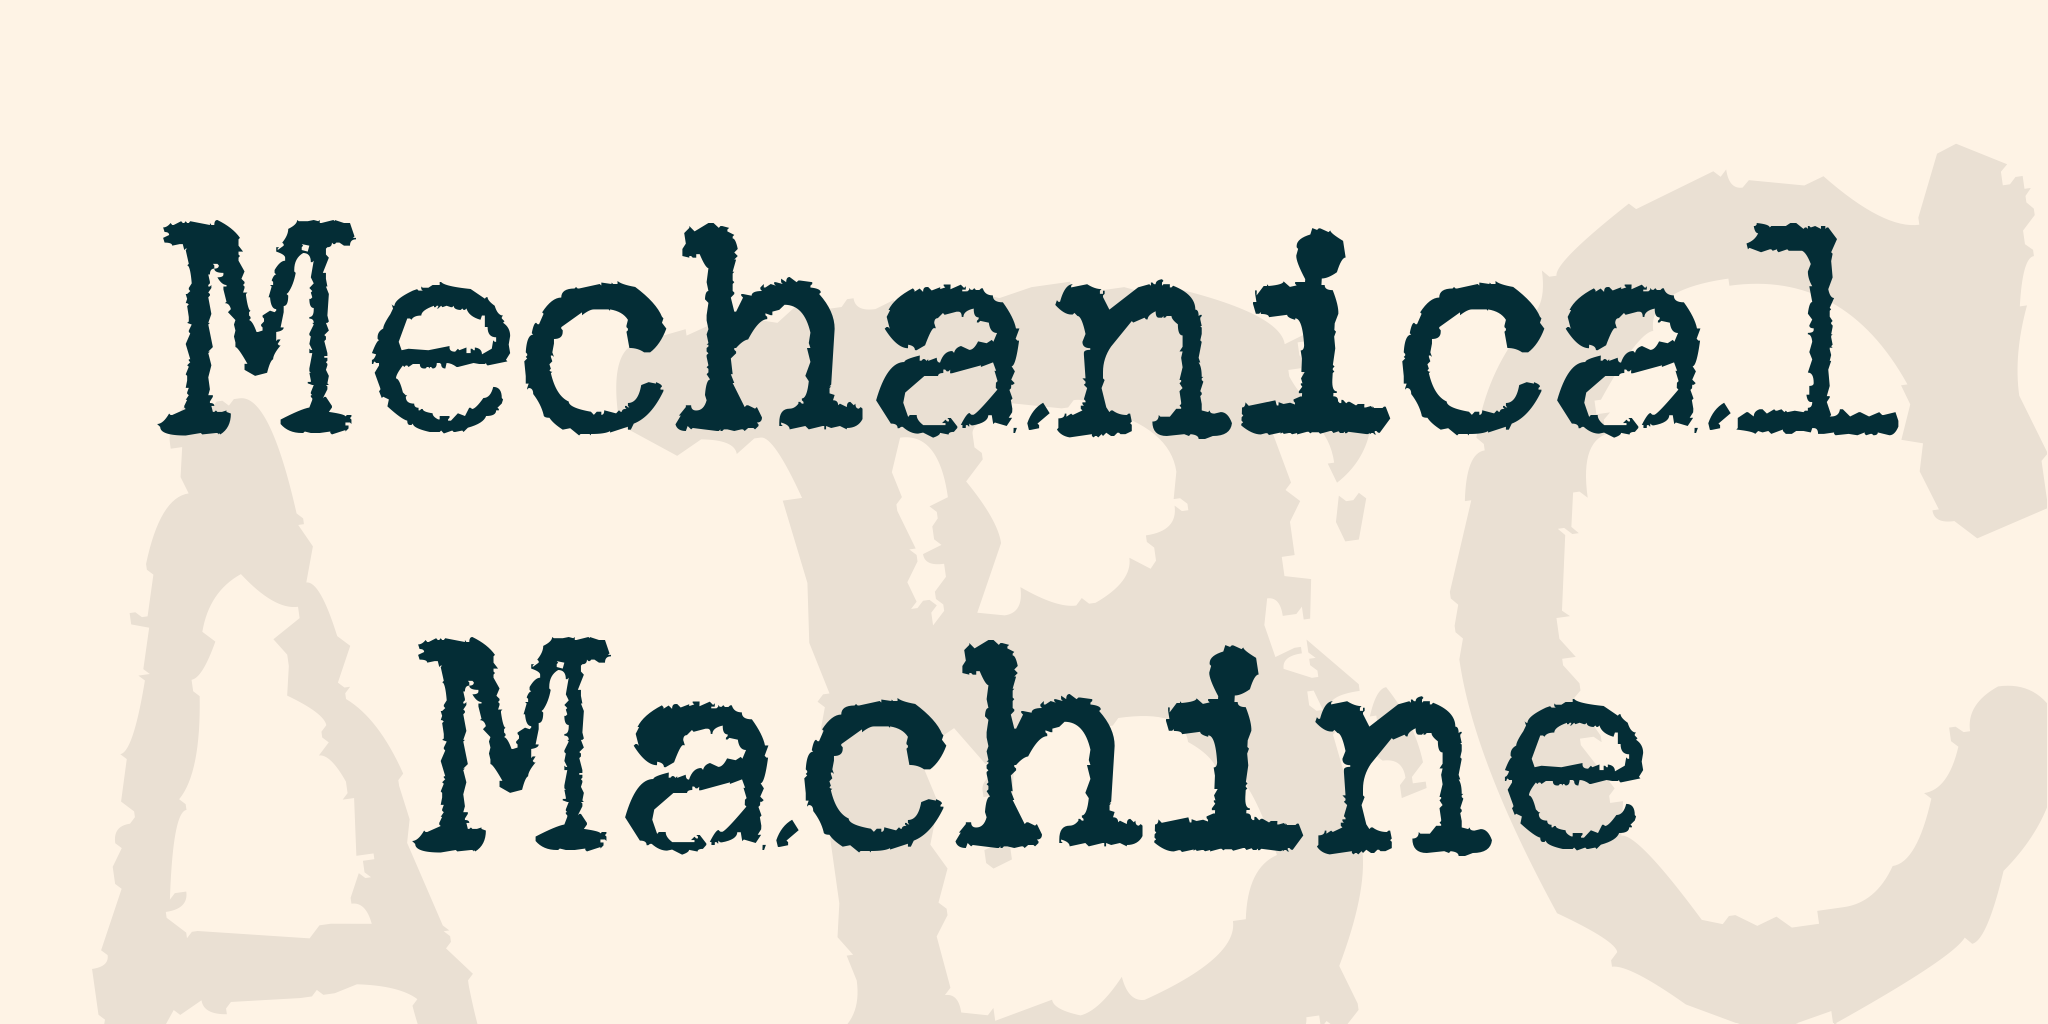 Mechanical Machine